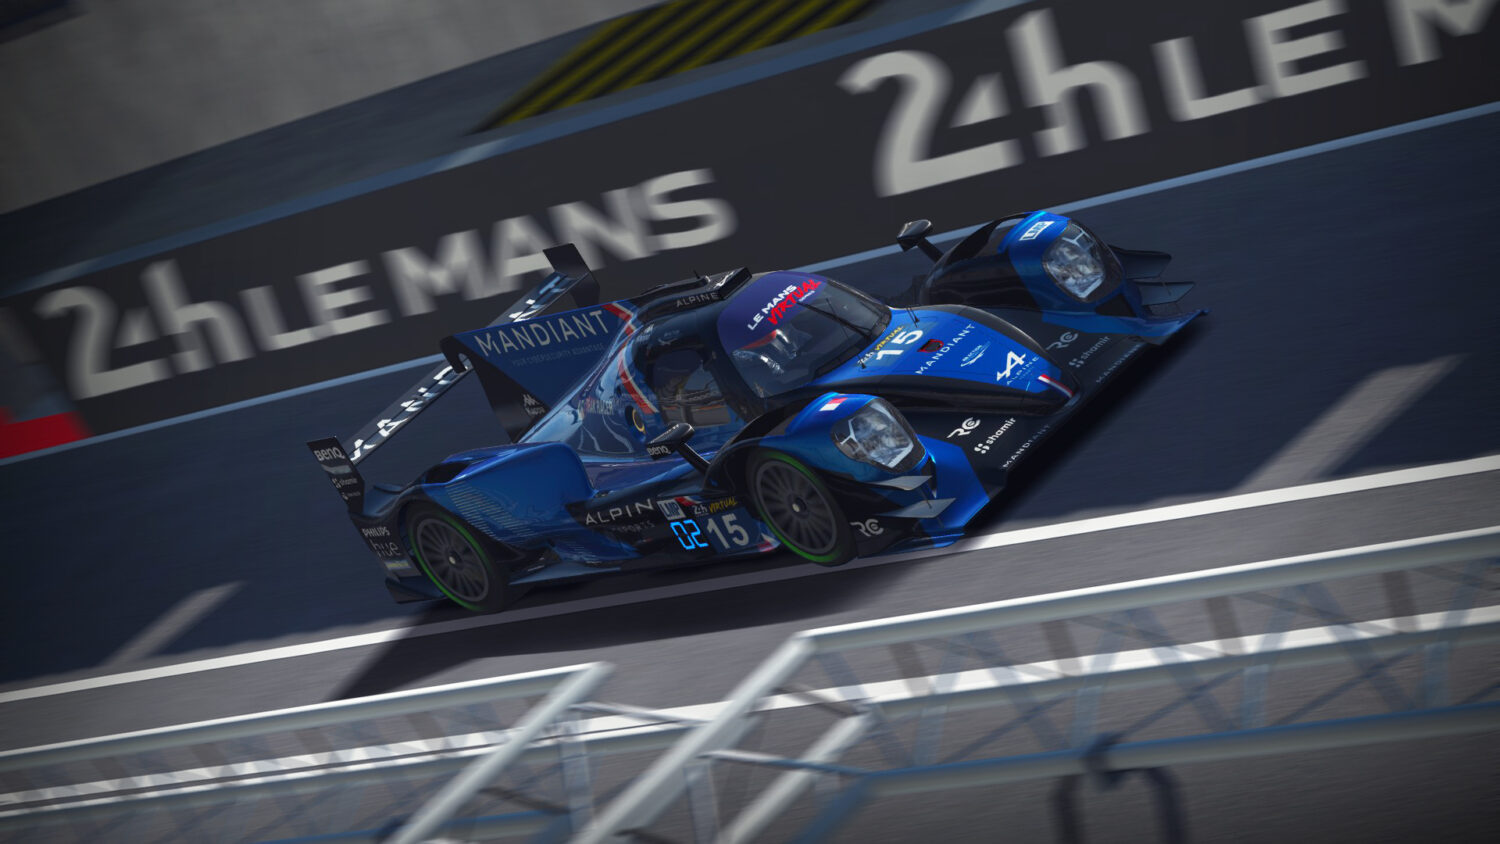 2022 - 24 Heures du Mans virtuelles.jpg